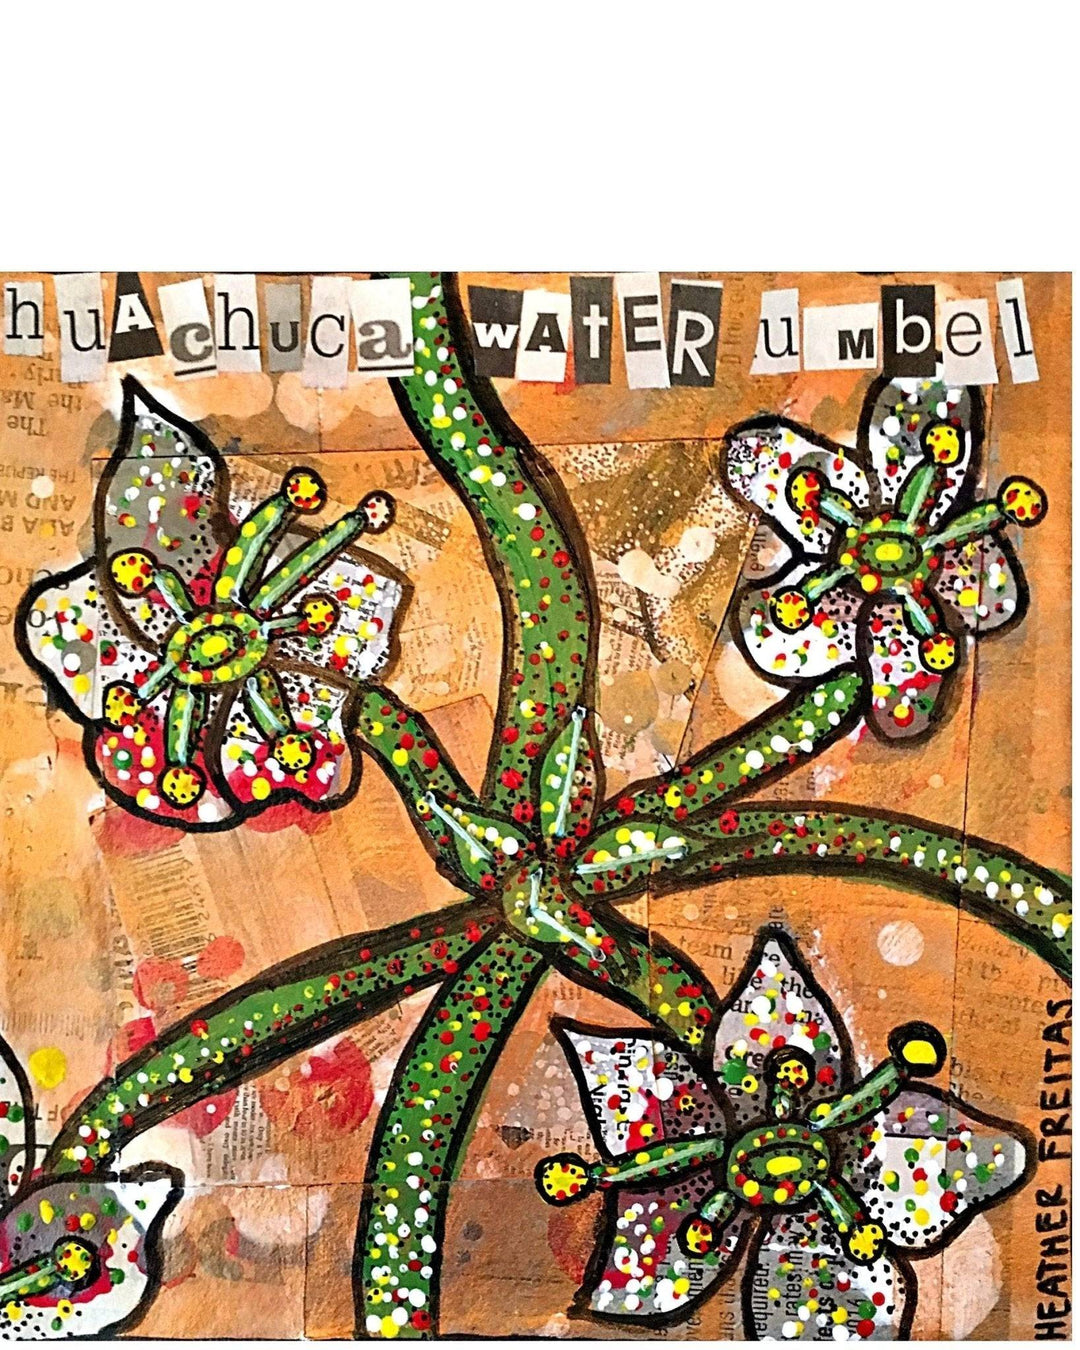 Huachuca Water Umbell - Heather Freitas 